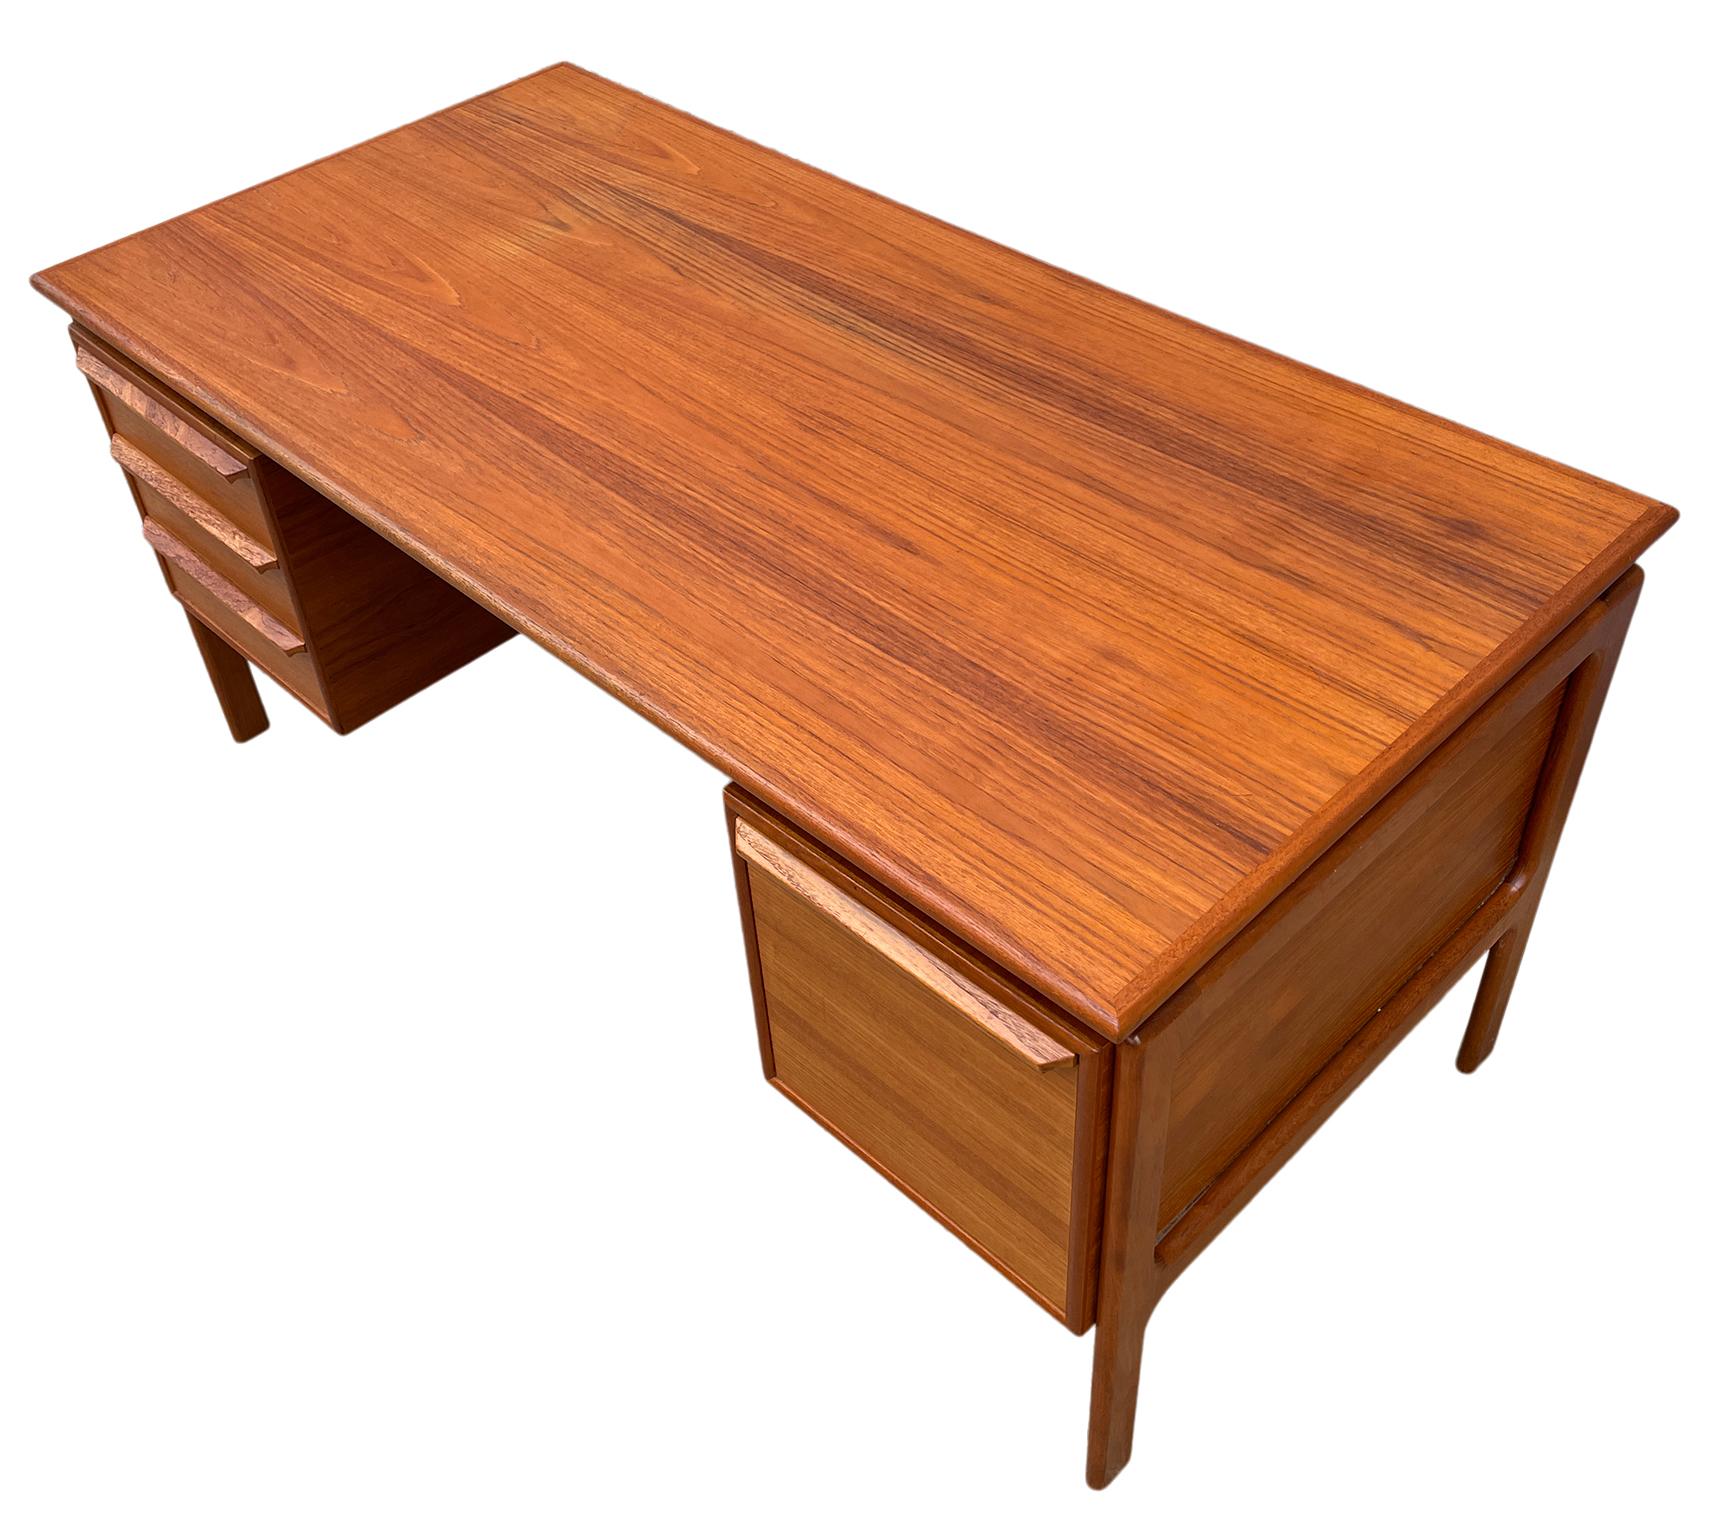 Woodwork Midcentury Danish Modern Teak Large Knee Hole Desk 4 Drawers File Holder Clean